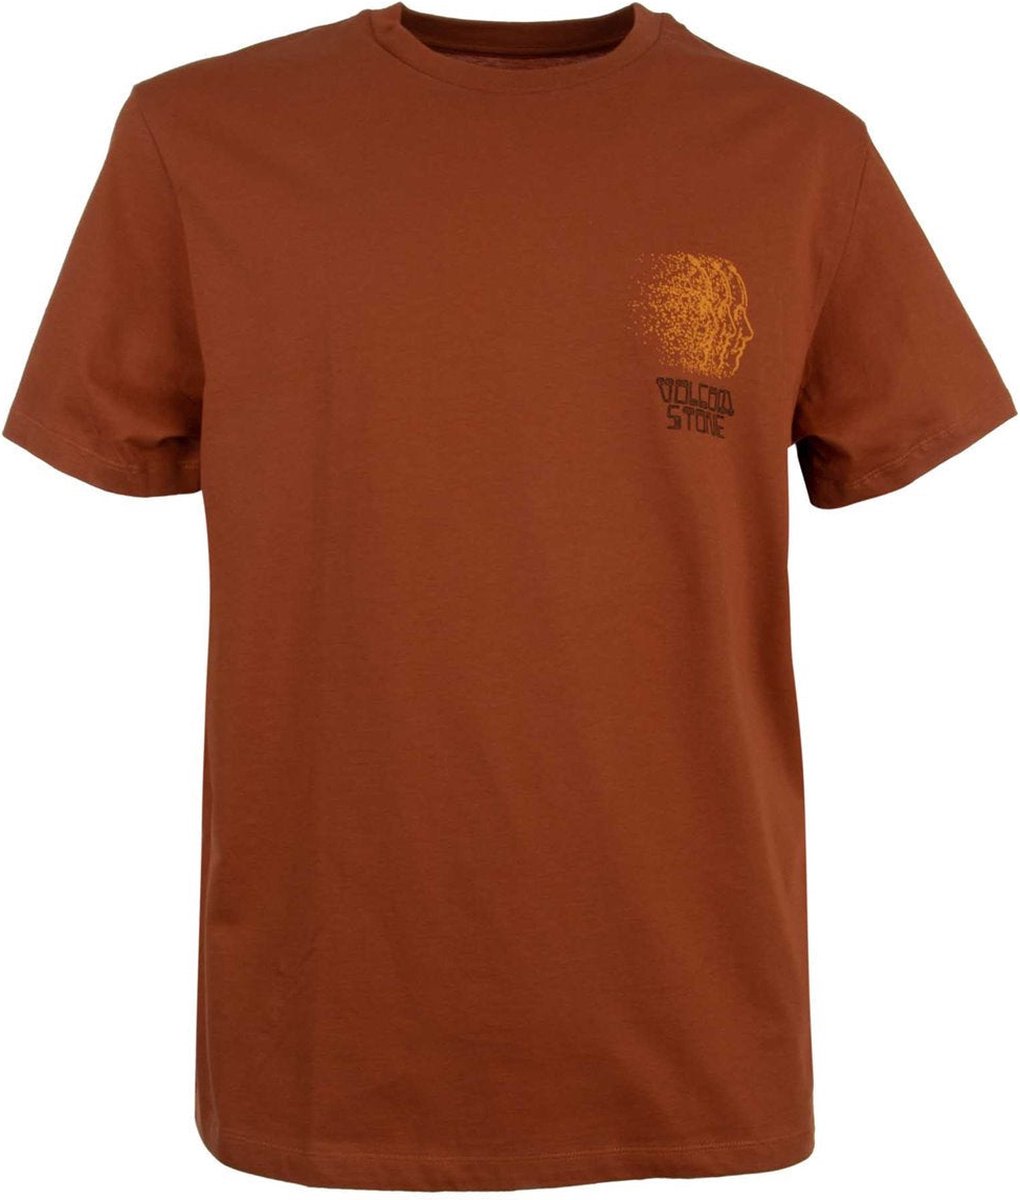 Volcom Renaissance Basic Standard T-shirt - Mocha